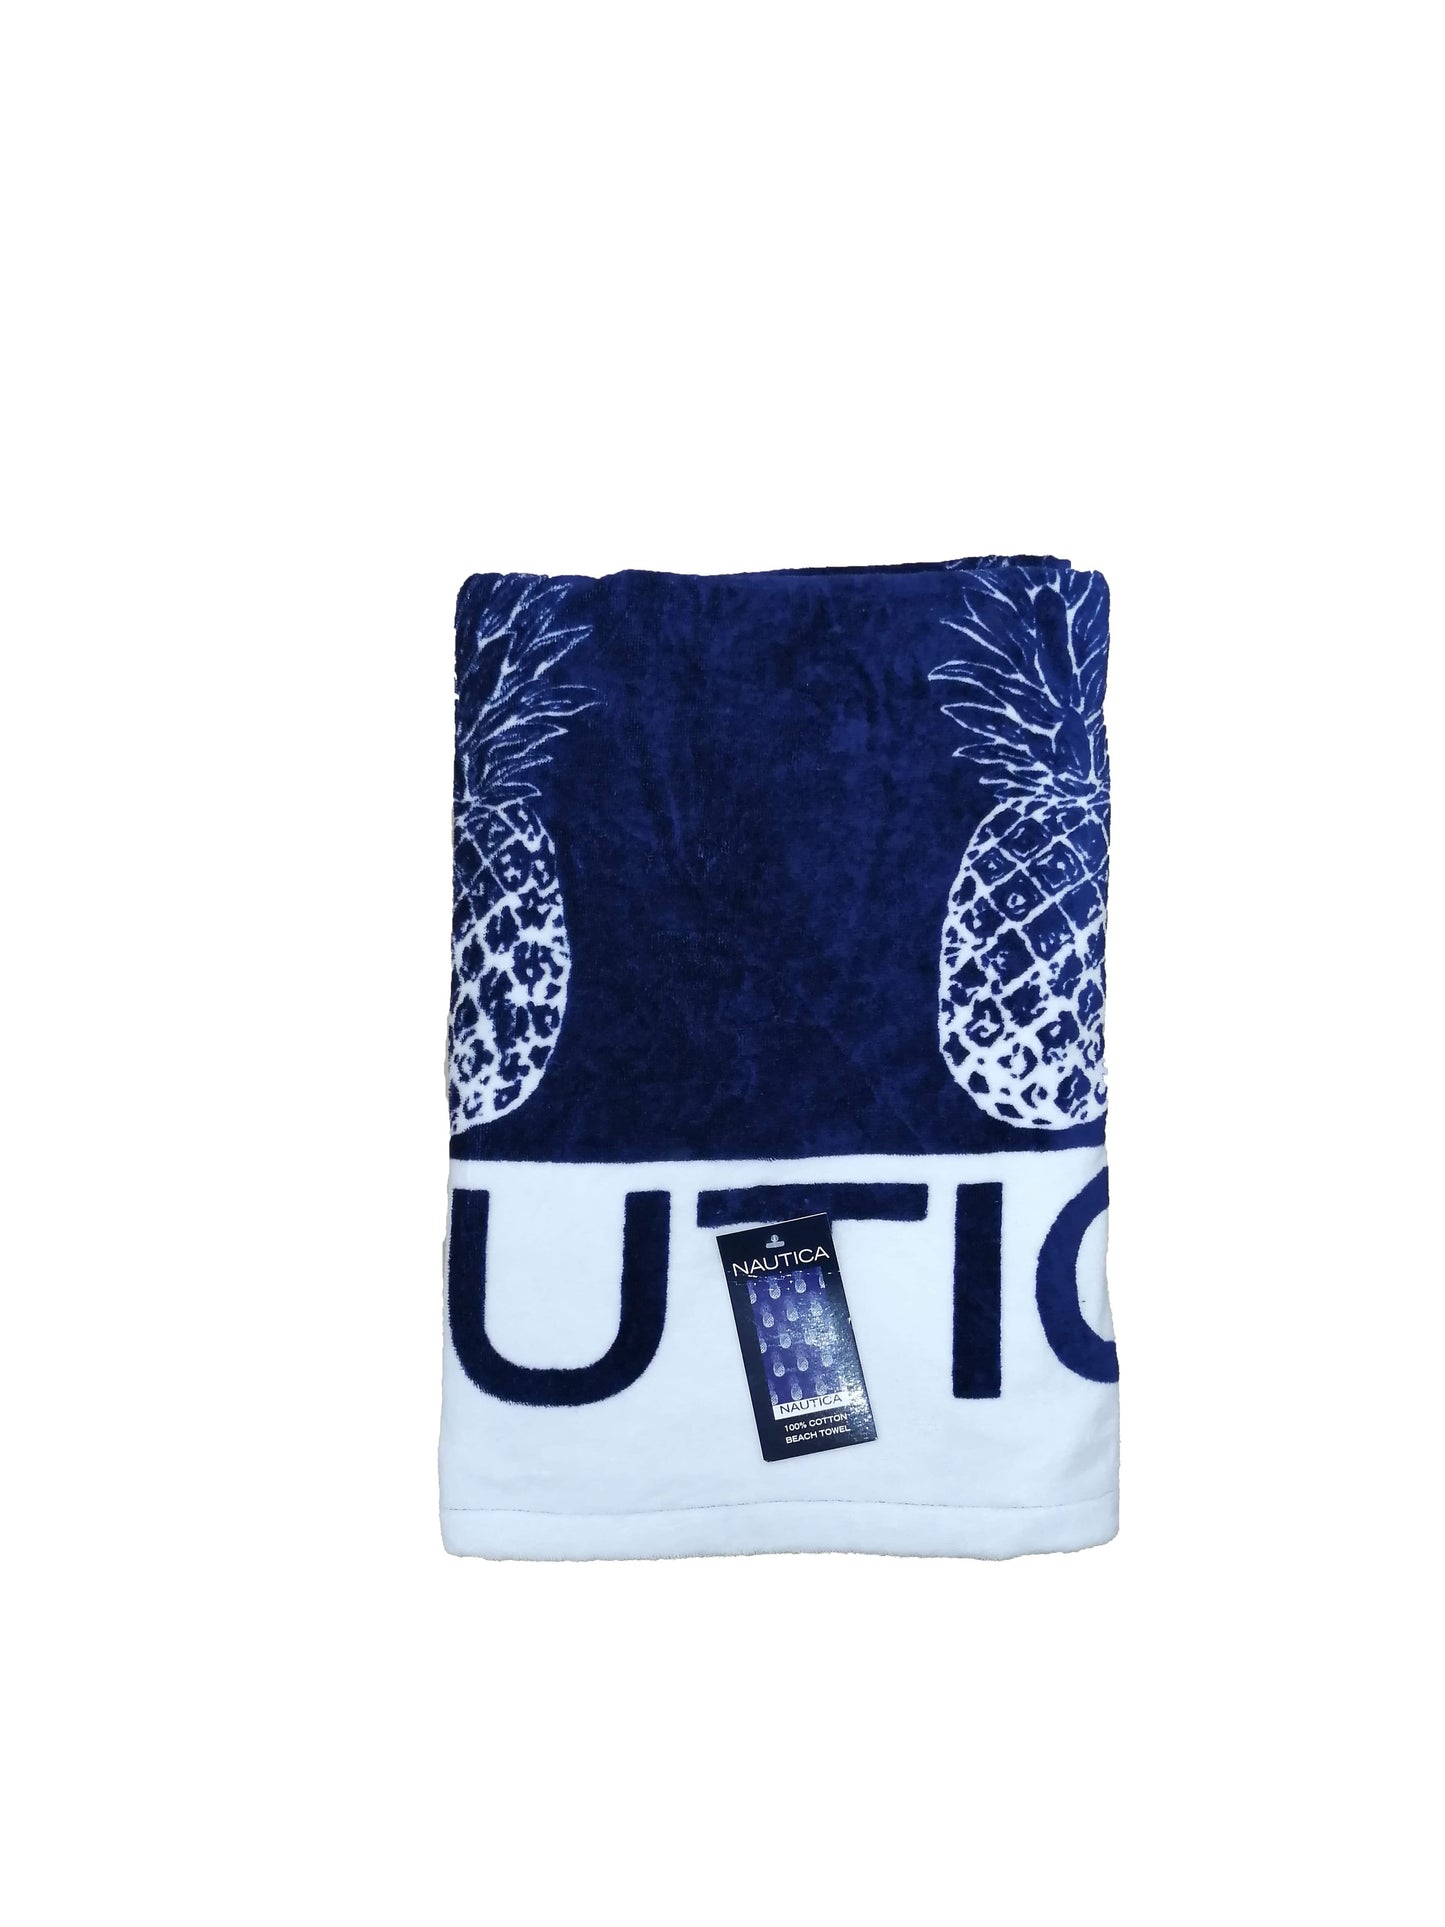 NAUTICA Towels 89 cm x 168 cm NAUTICA - Pineapple Beach Towel